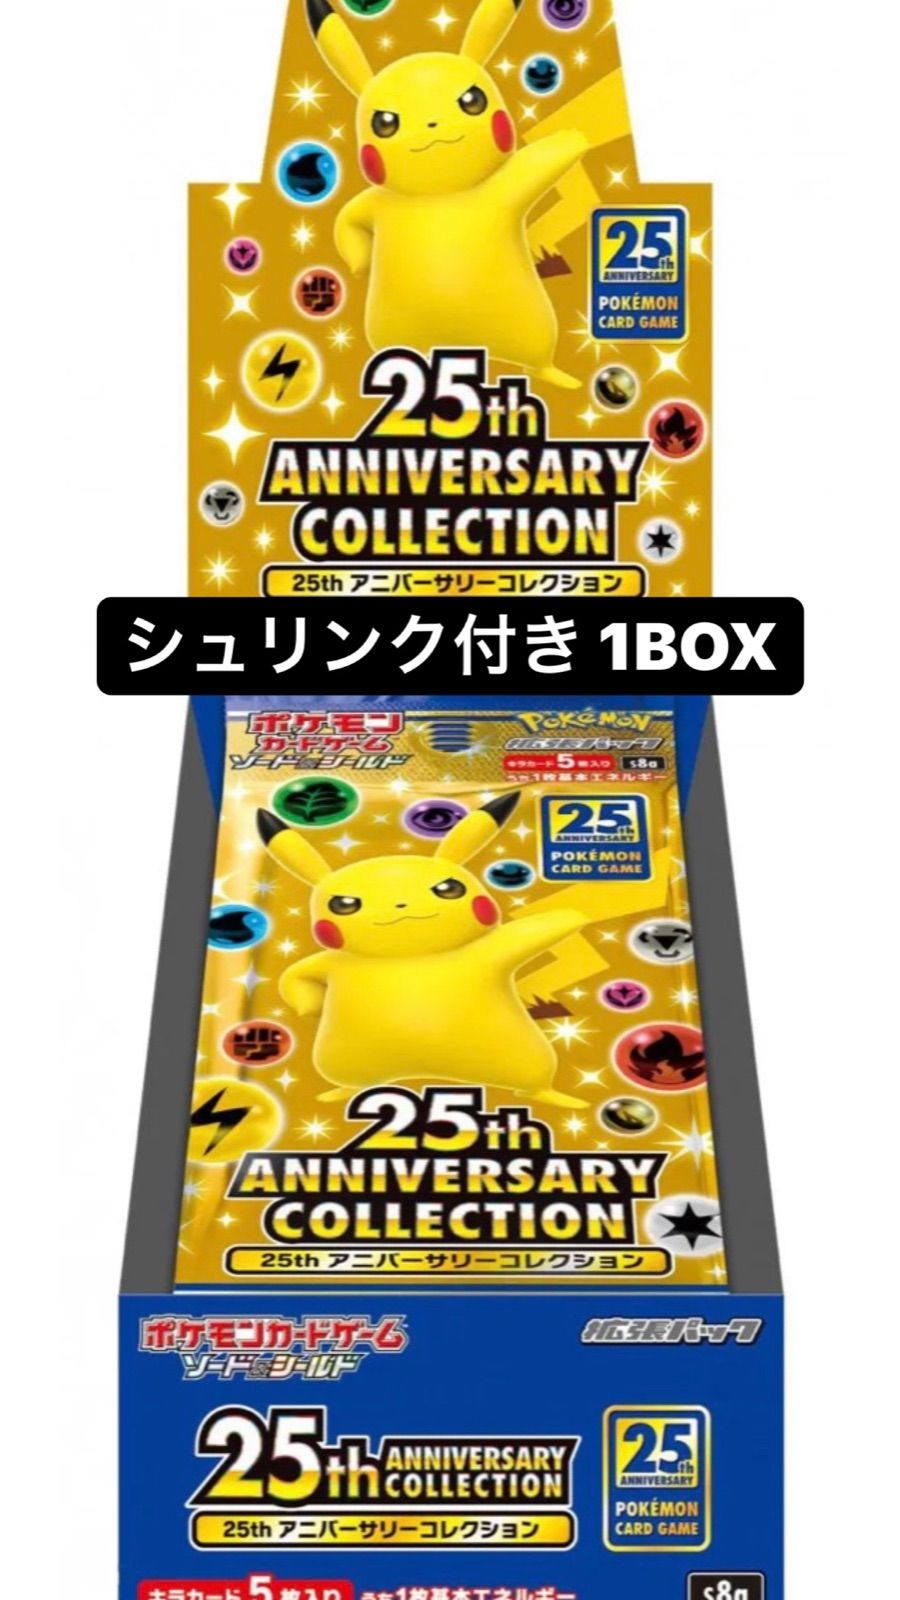 25th ANNIVERSARY COLLECTION×1BOX【シュリンク付】 | www.myglobaltax.com